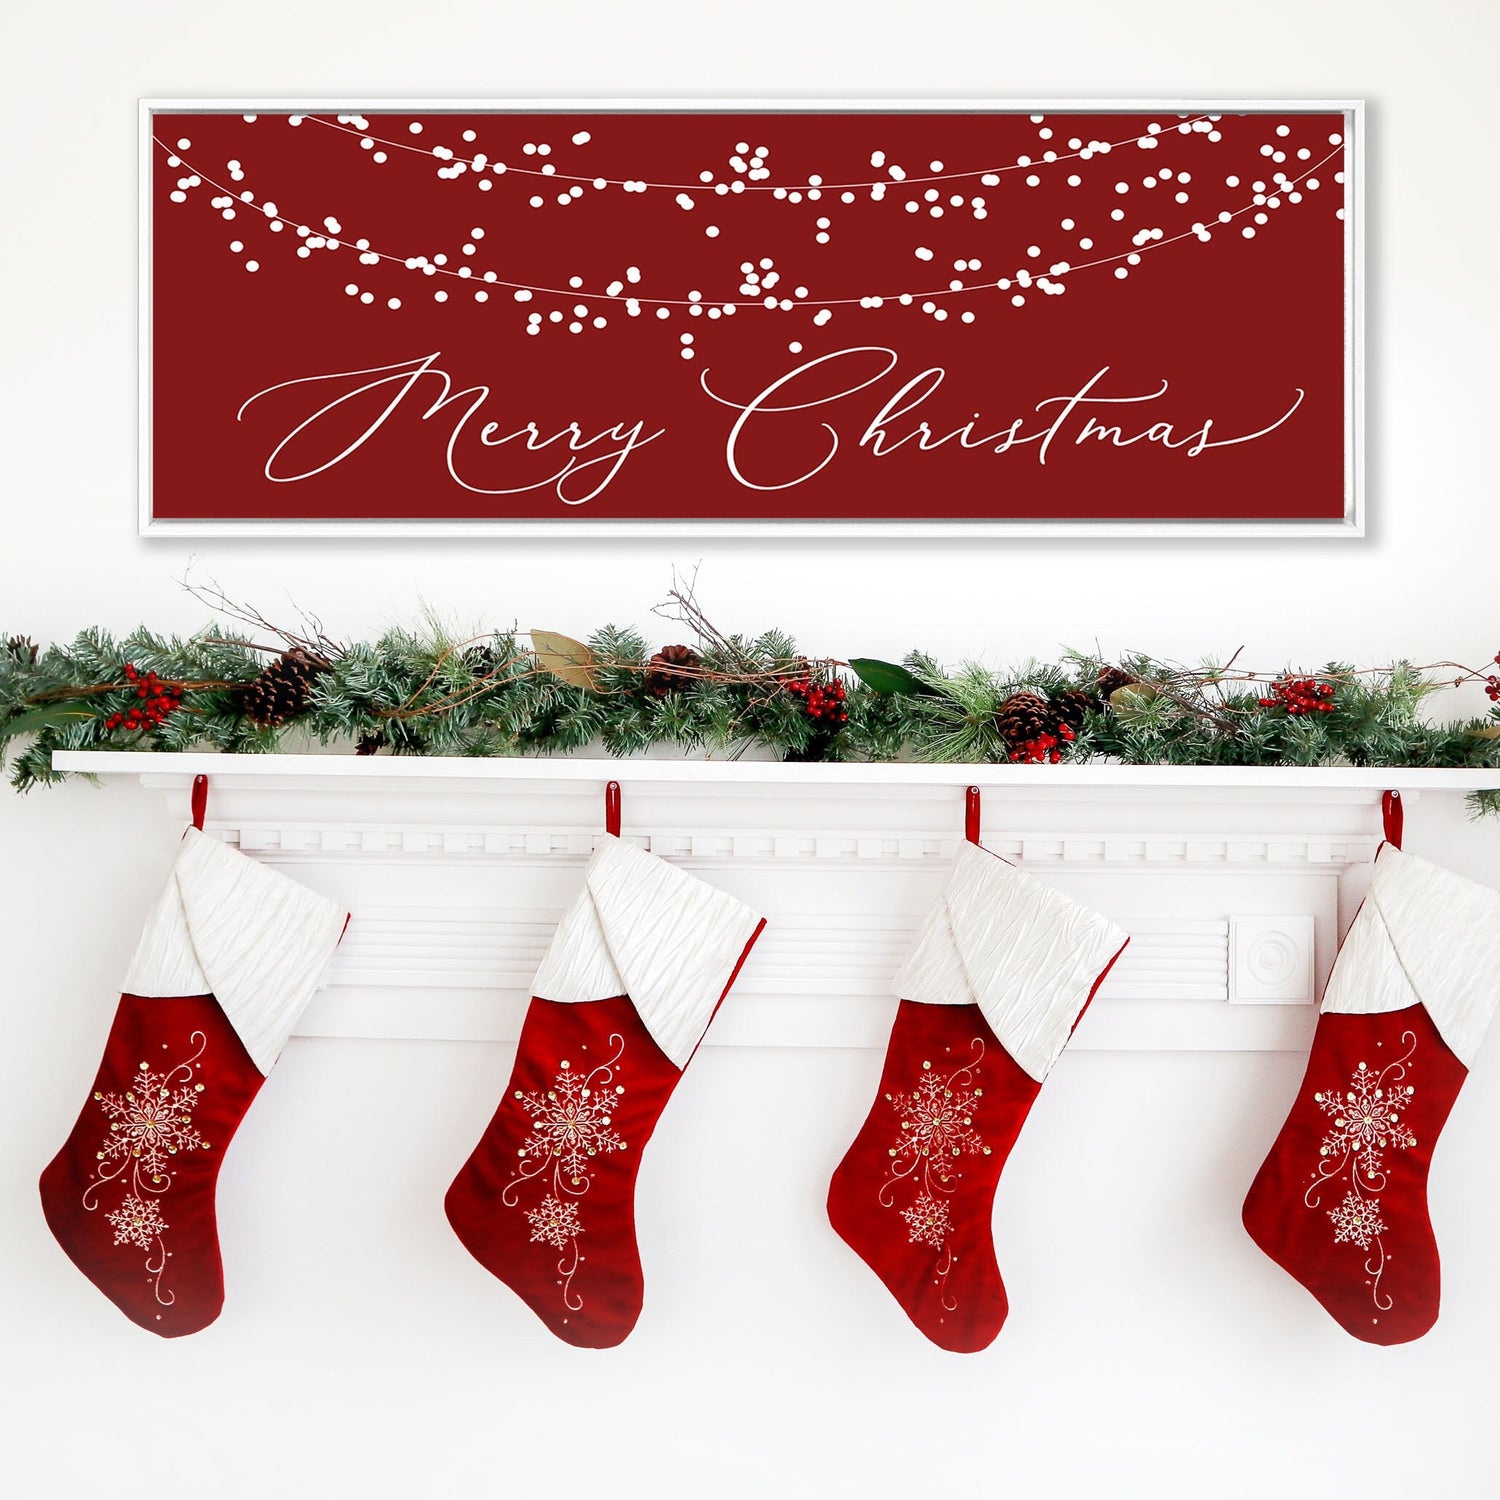 MERRY CHRISTMAS SIGN | Christian Christmas Wall Decor | Merry Christmas Wall Decor | Christmas Decoration Idea | With Frame Options